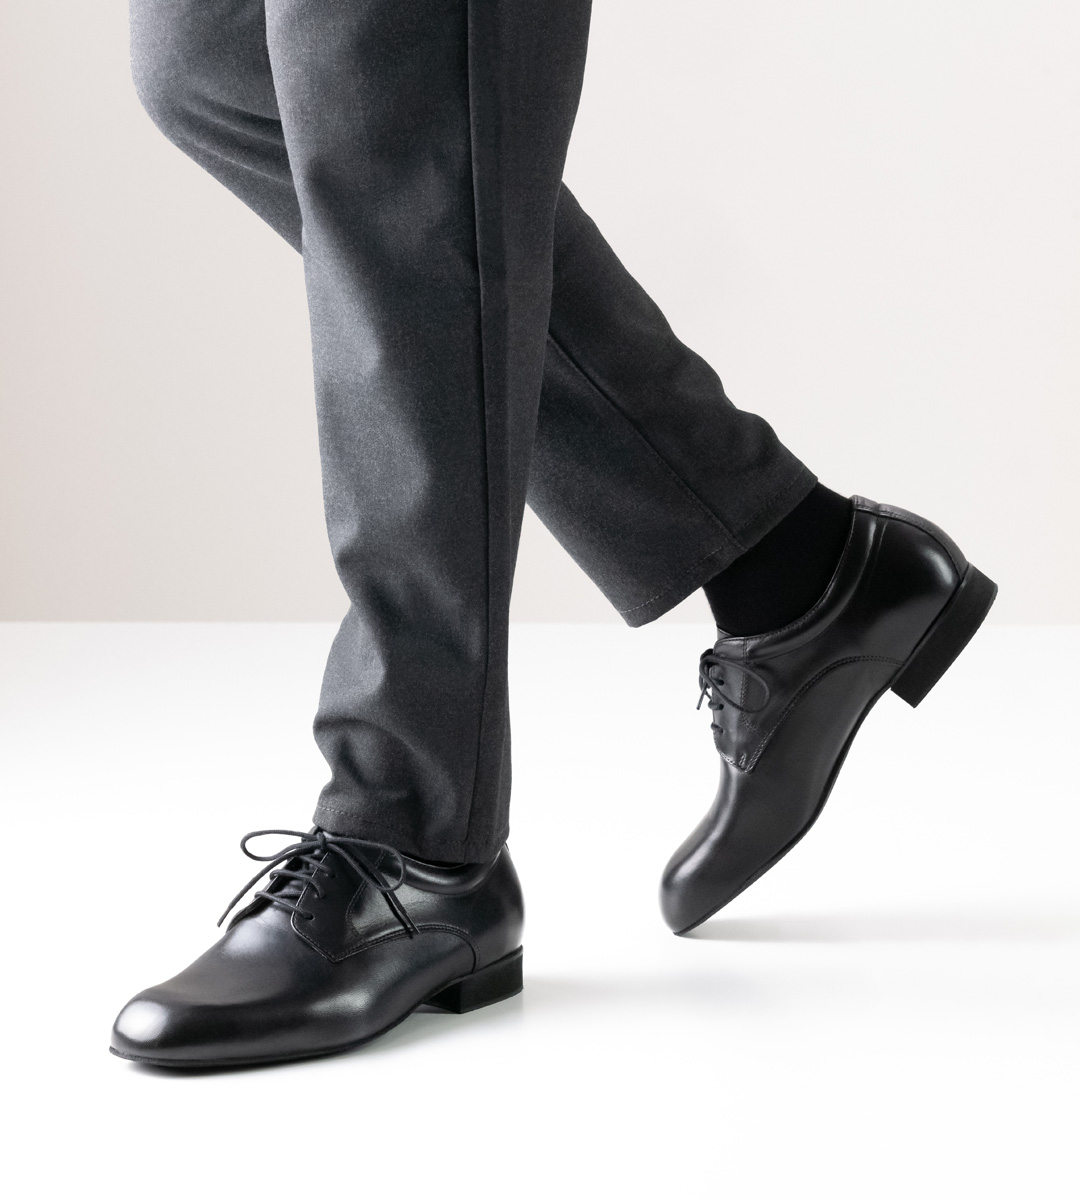 Werner Kern men's dance shoe for wide feet in black